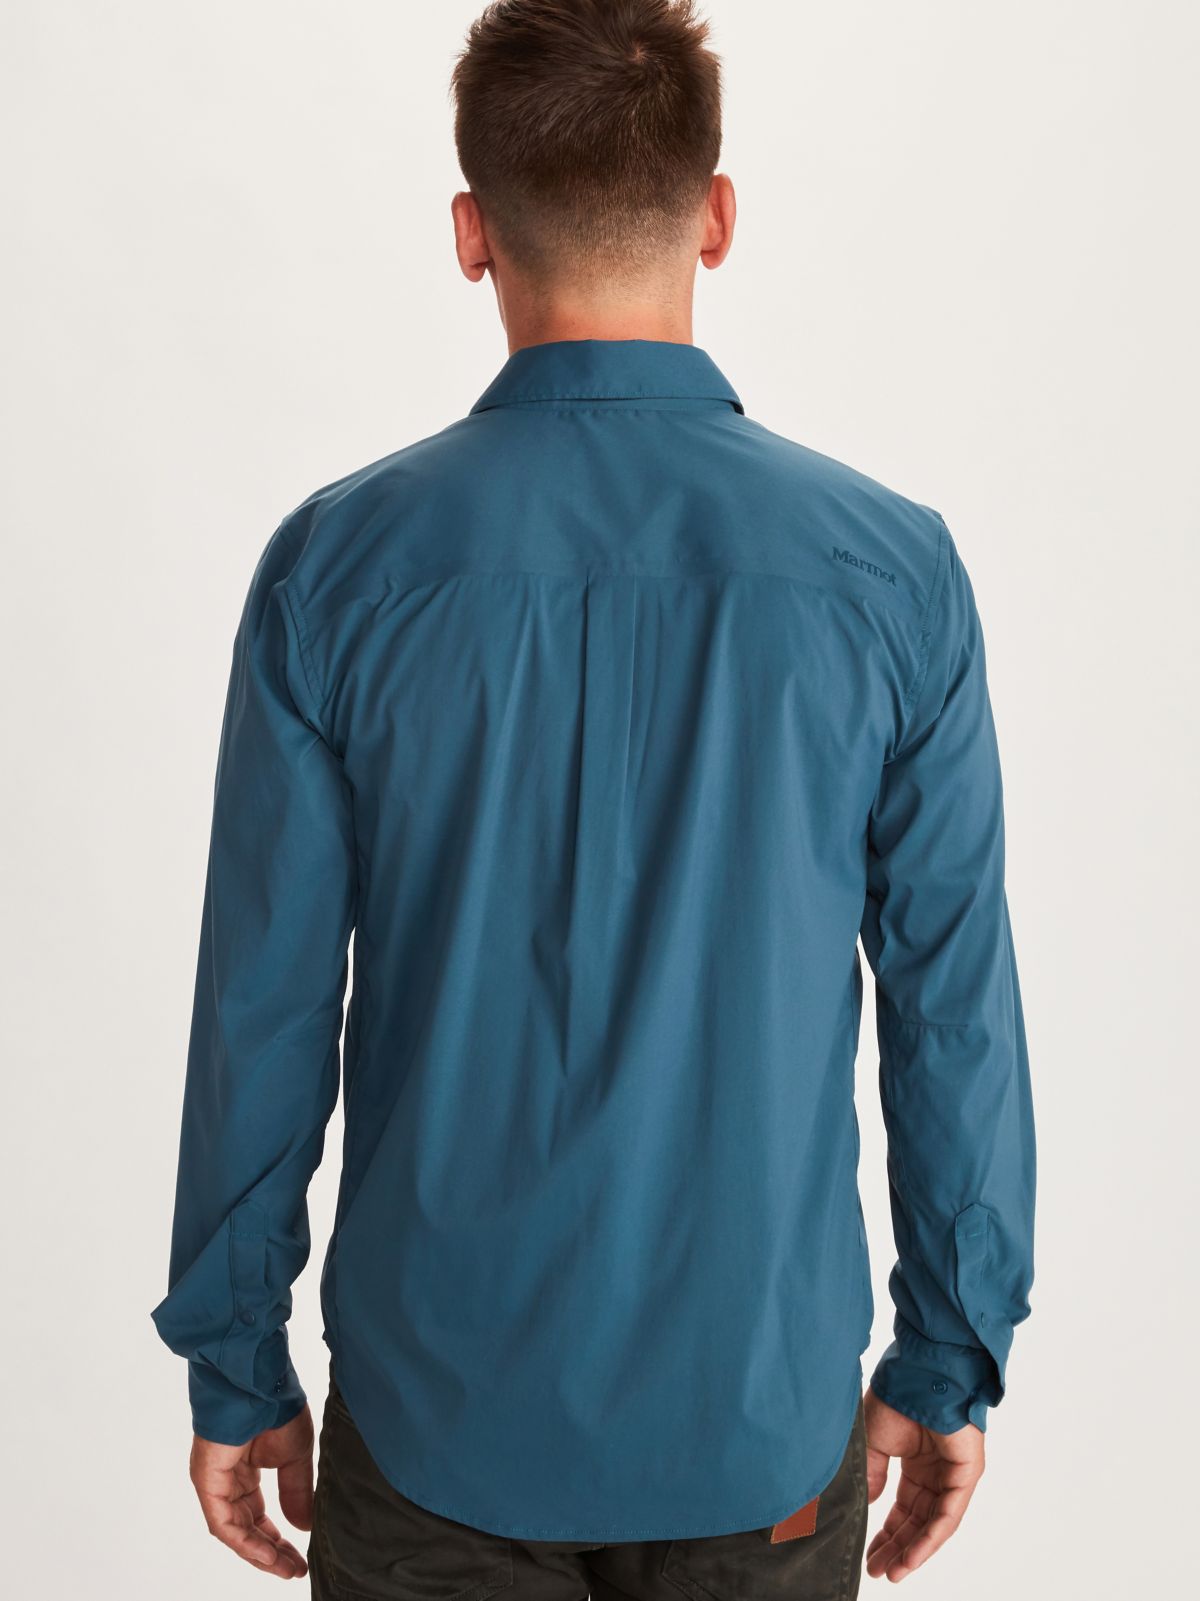 Men's Runyon Long-Sleeve Shirt | Marmot